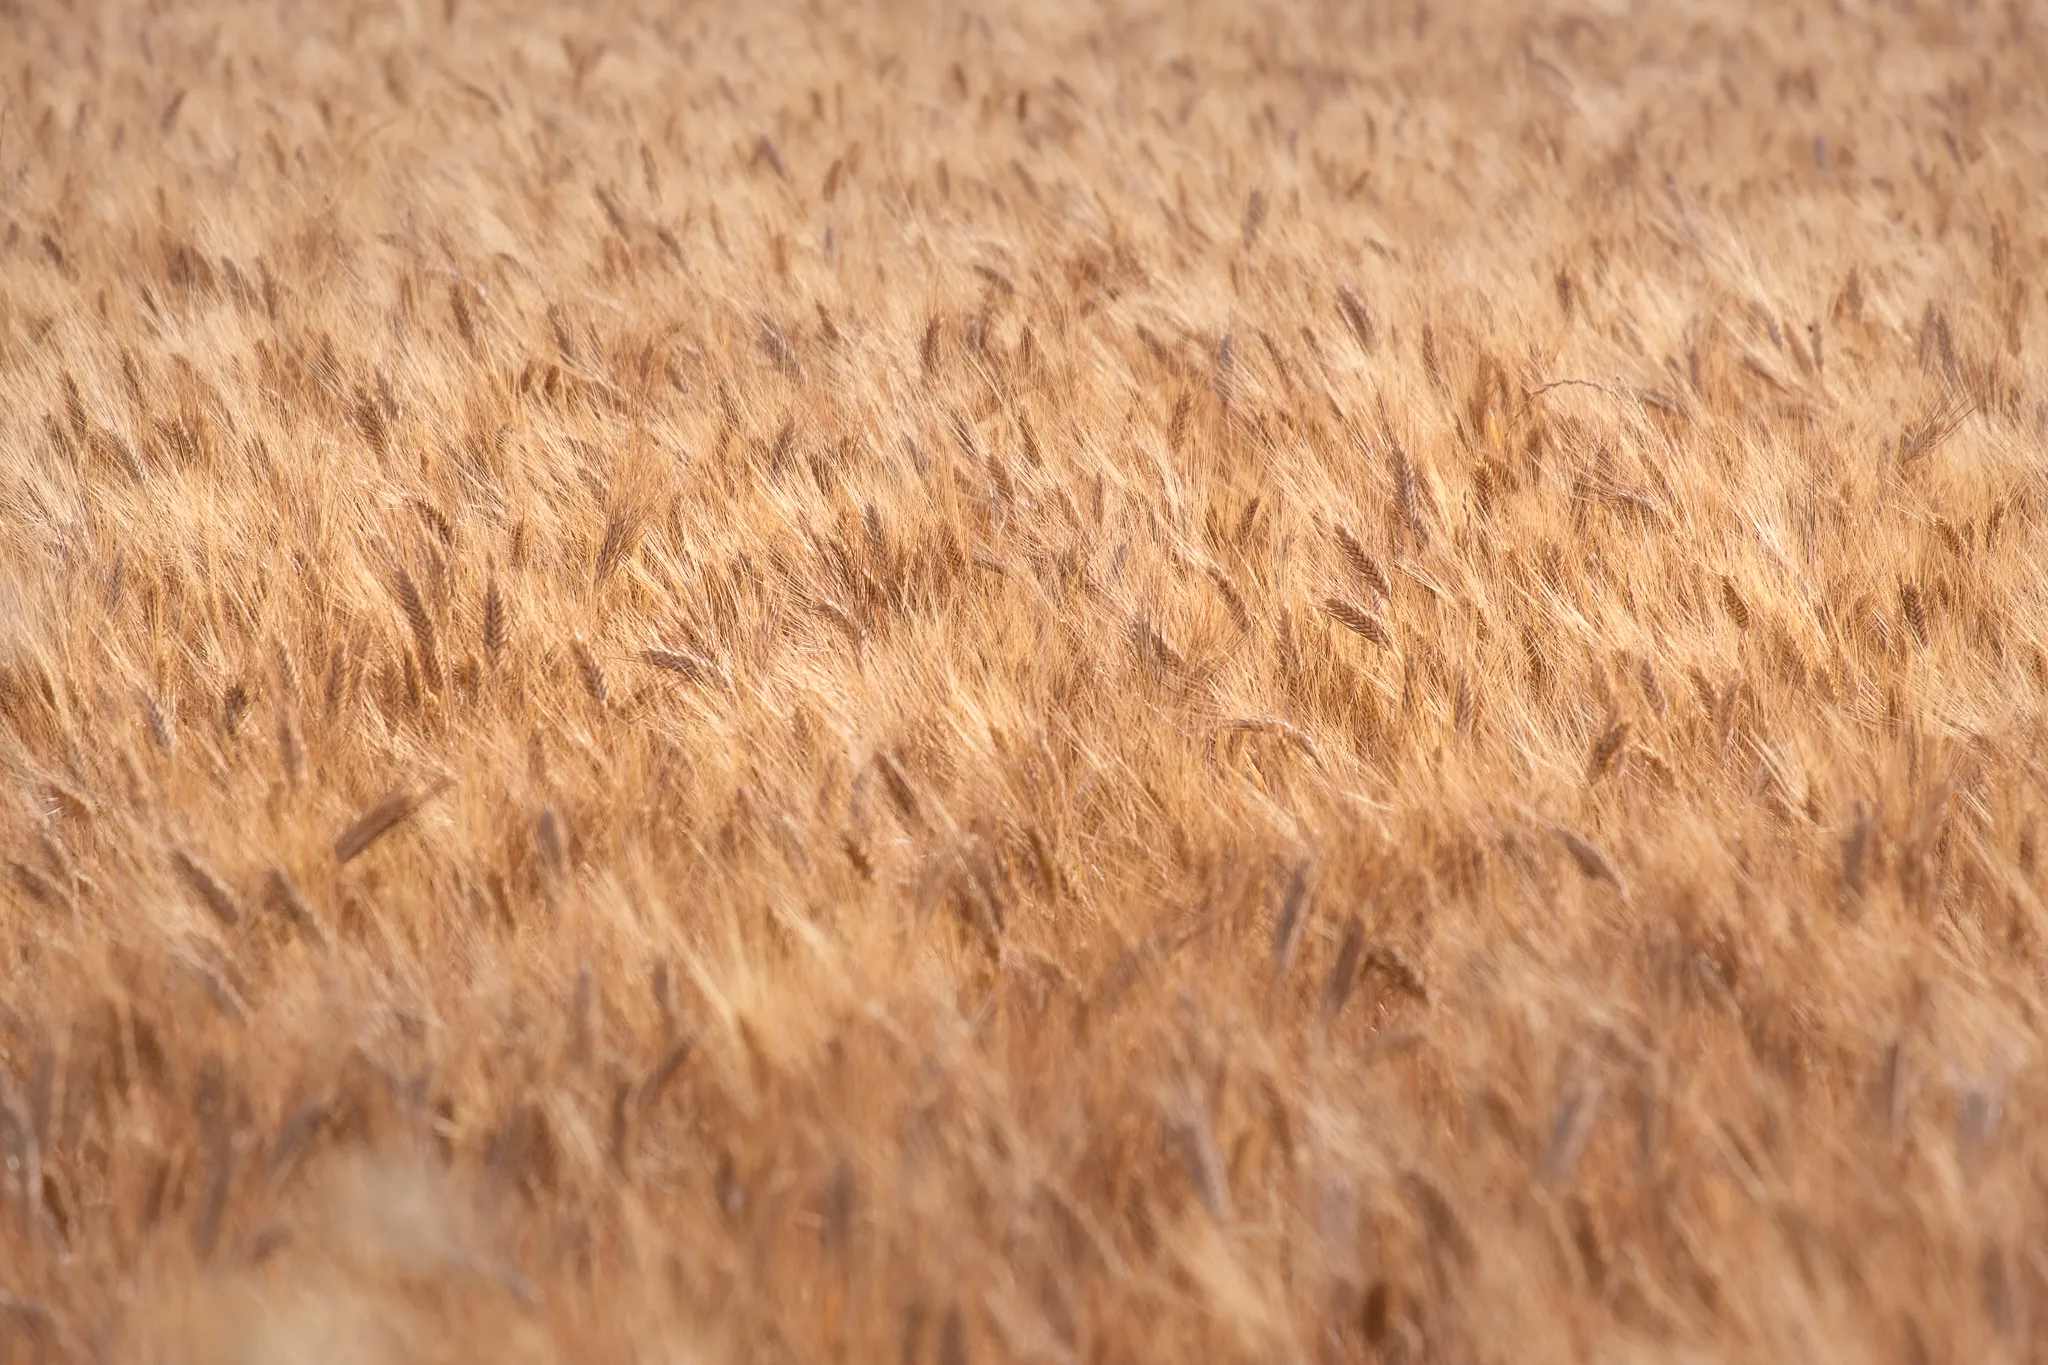 Wheat field in Tuscany